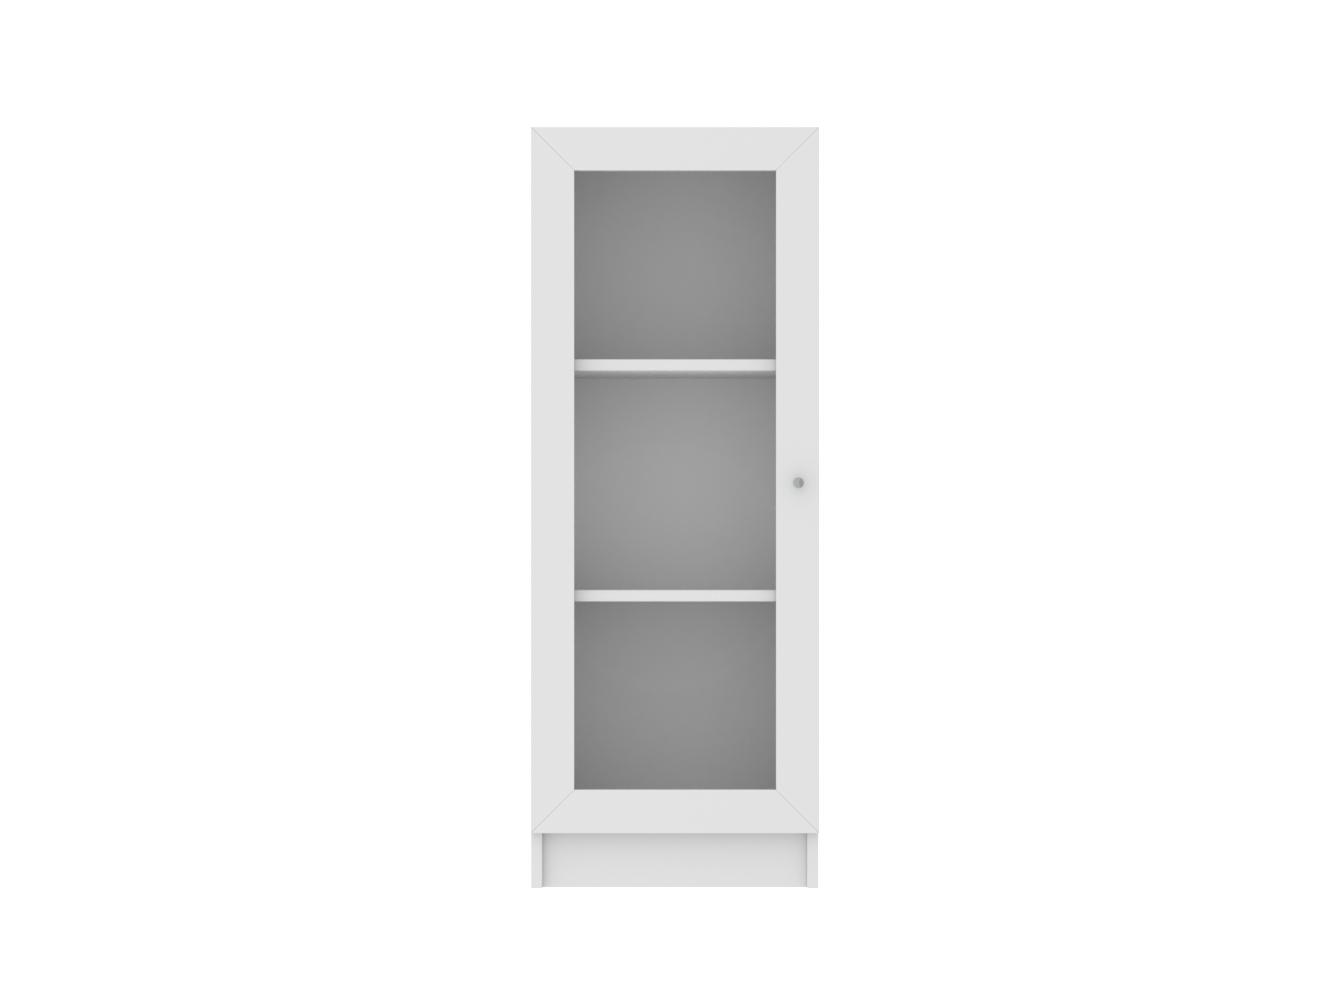 Книжный шкаф Билли 418 white ИКЕА (IKEA) изображение товара